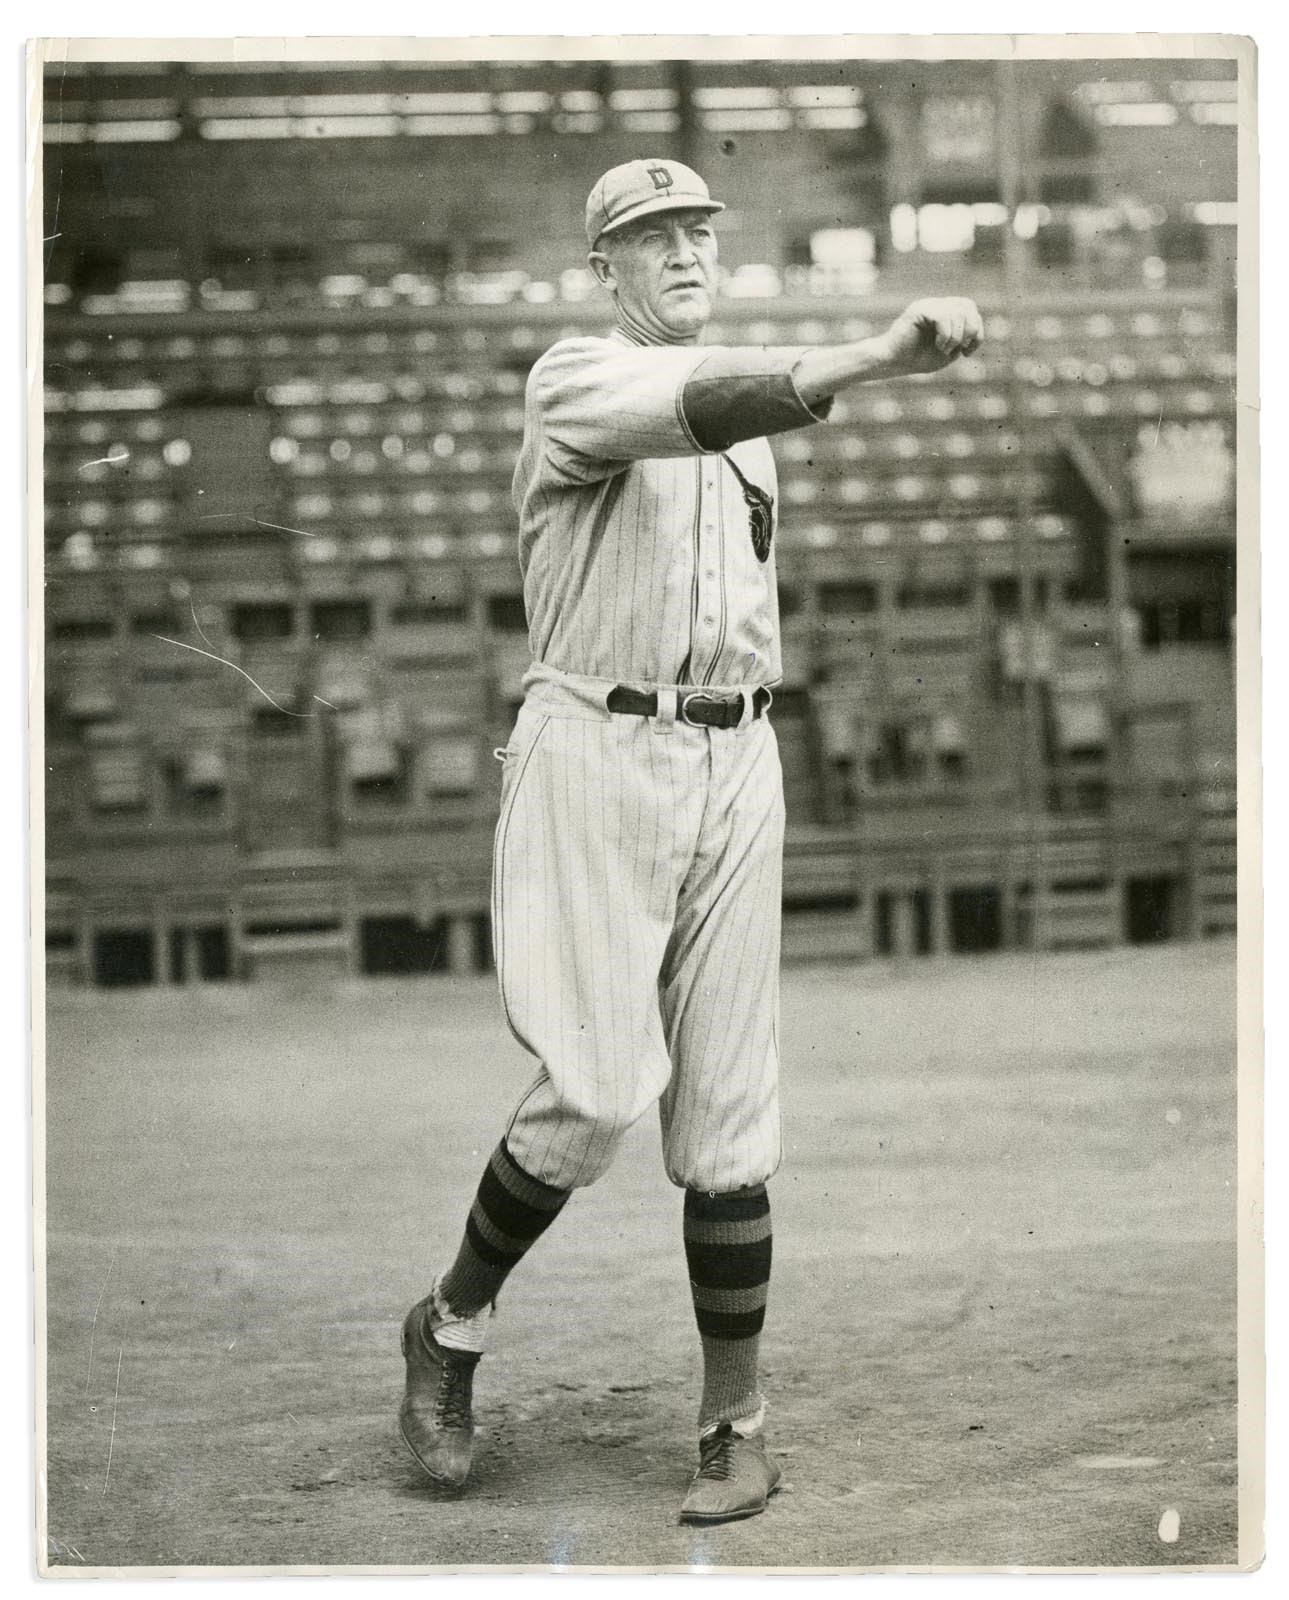 Vintage Sports Photographs - Last Baseball Photo of Grover Cleveland Alexander